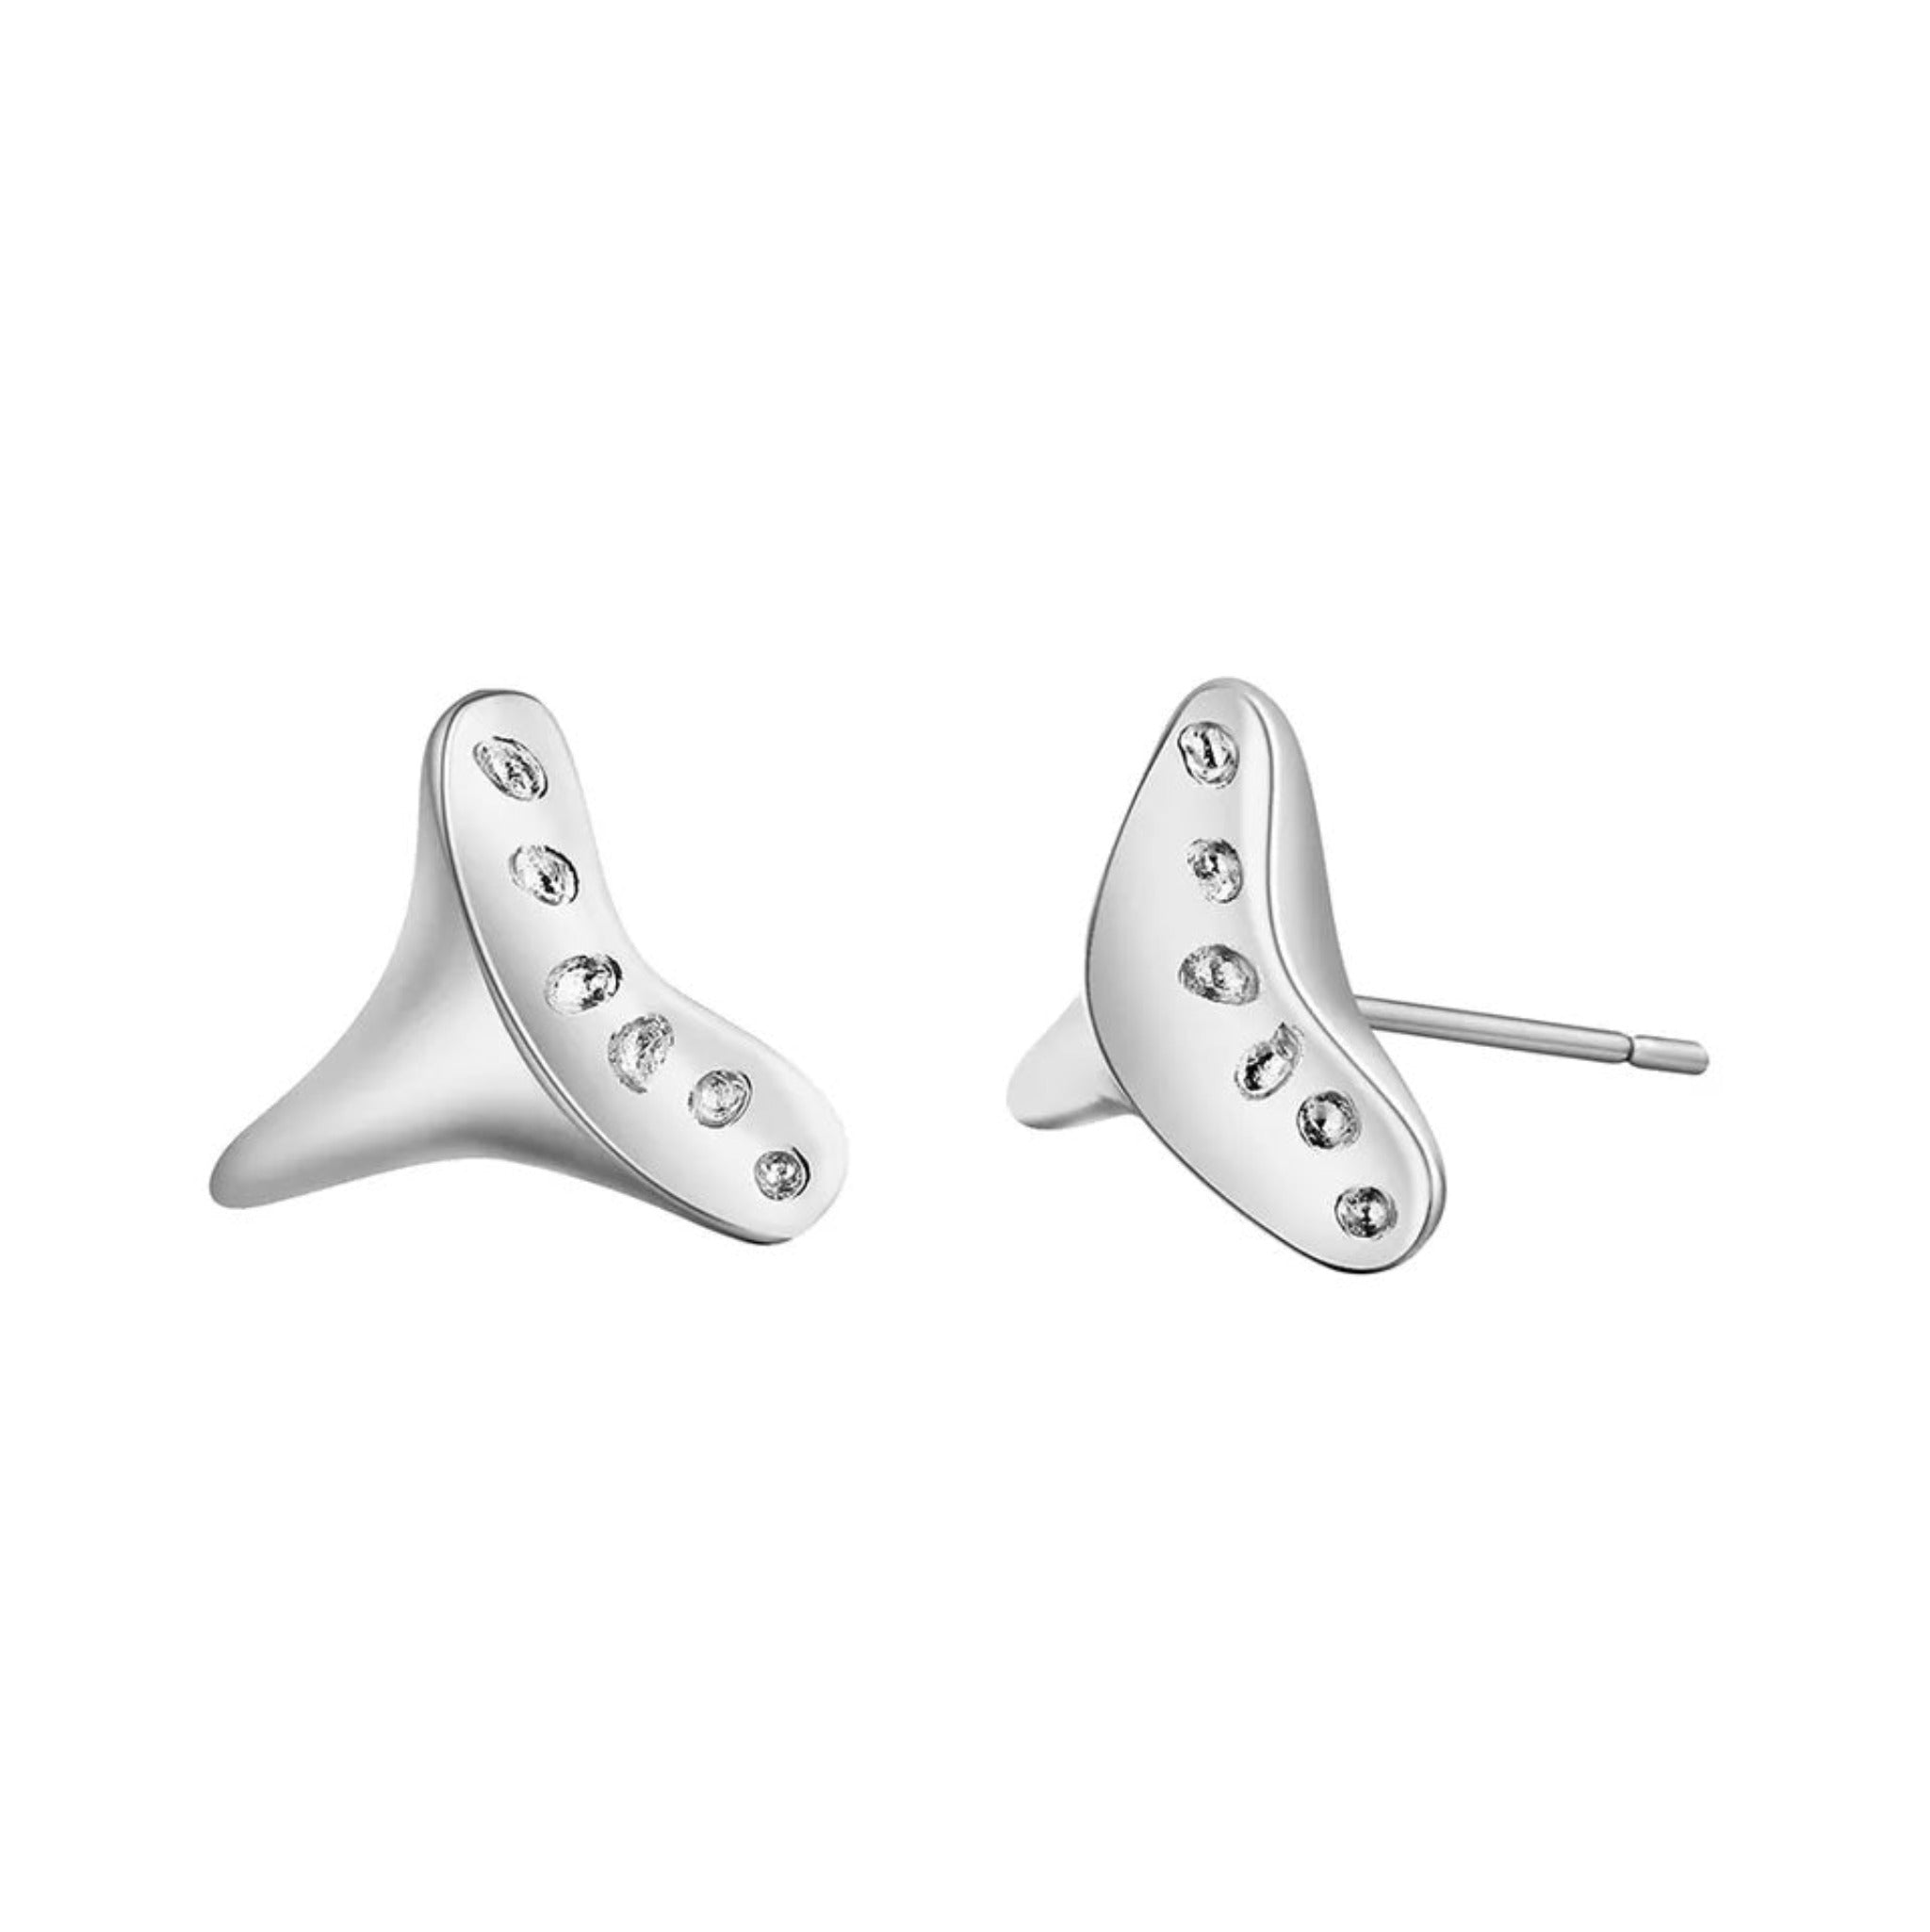 Louis Vuitton Bionic Earrings in Metallic